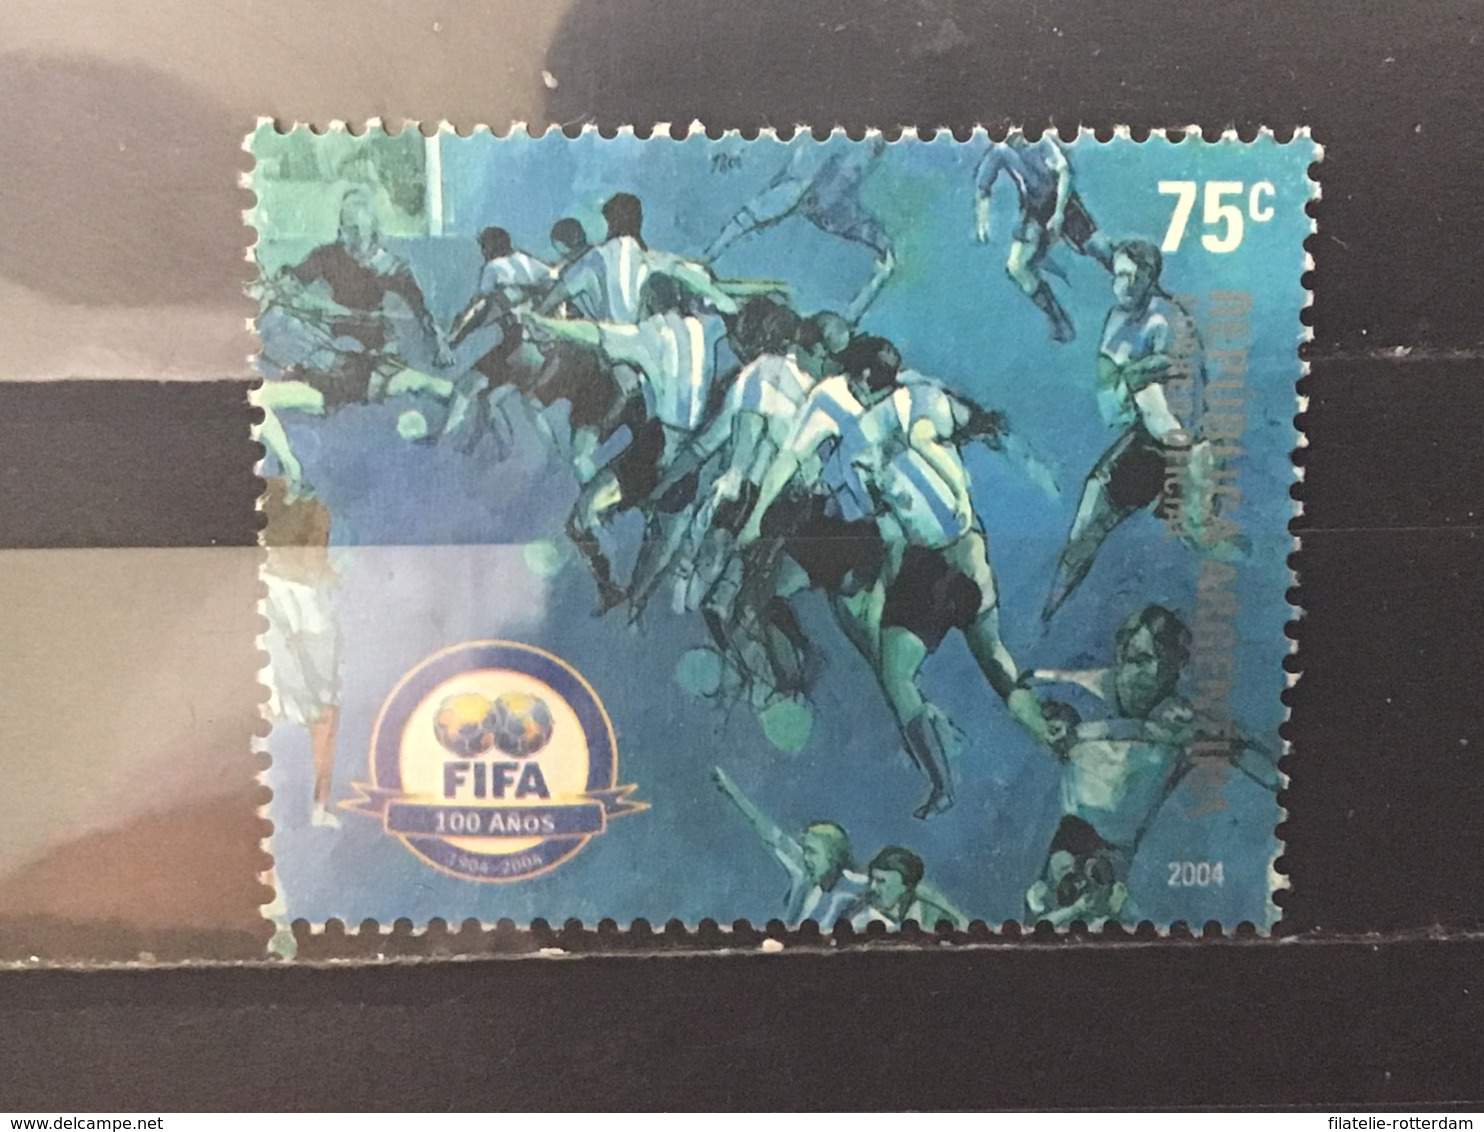 Argentinië / Argentina - 100 Jaar FIFA (75) 2004 - Used Stamps